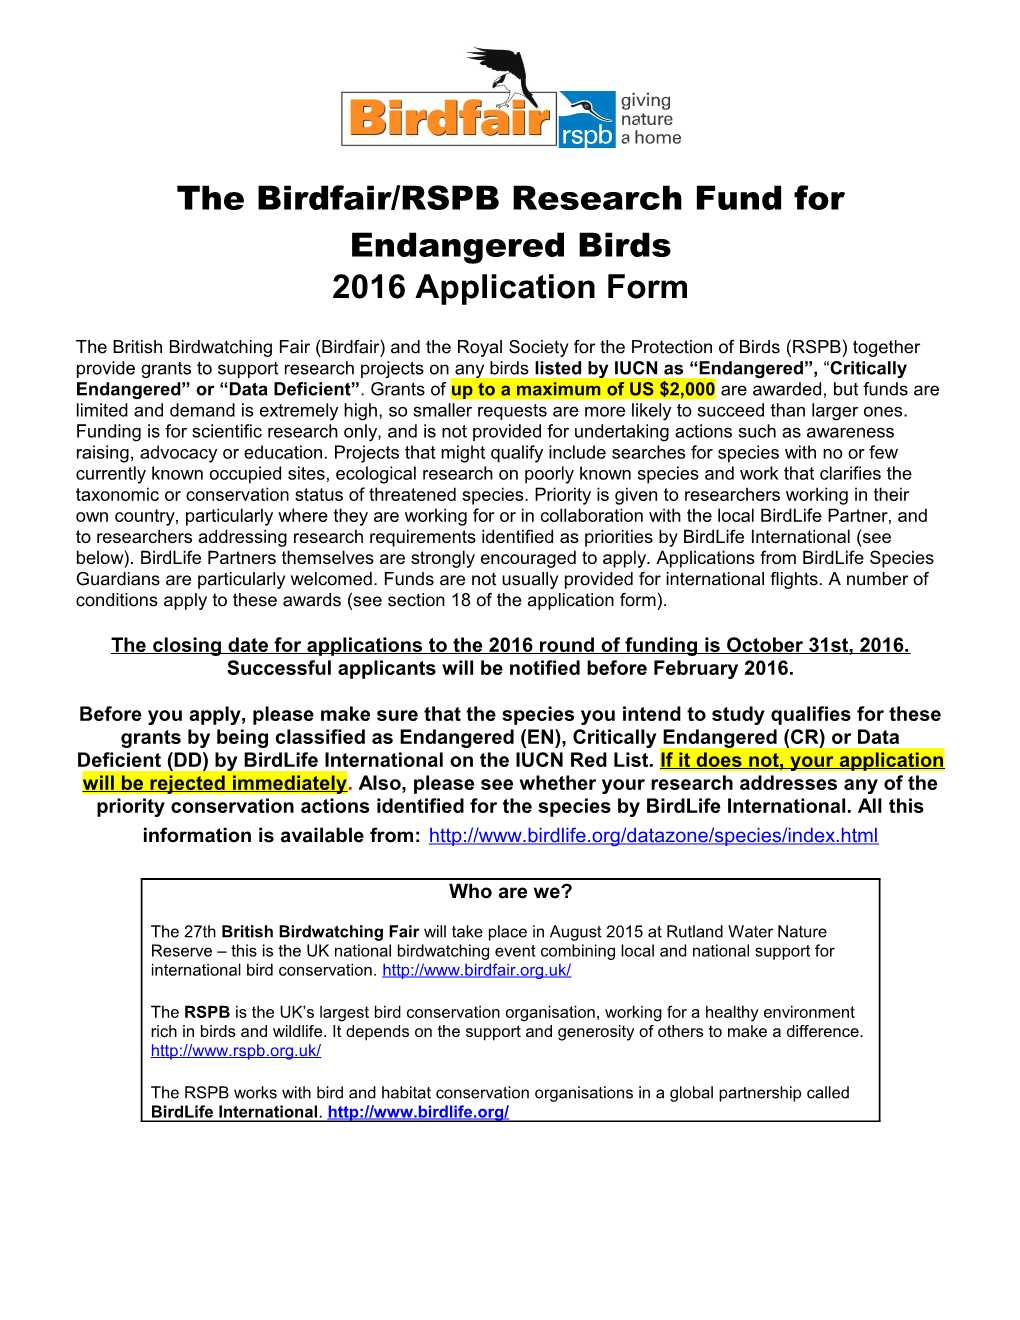 The RSPB/Birdfair Research Fund for Endangered Birds Logos